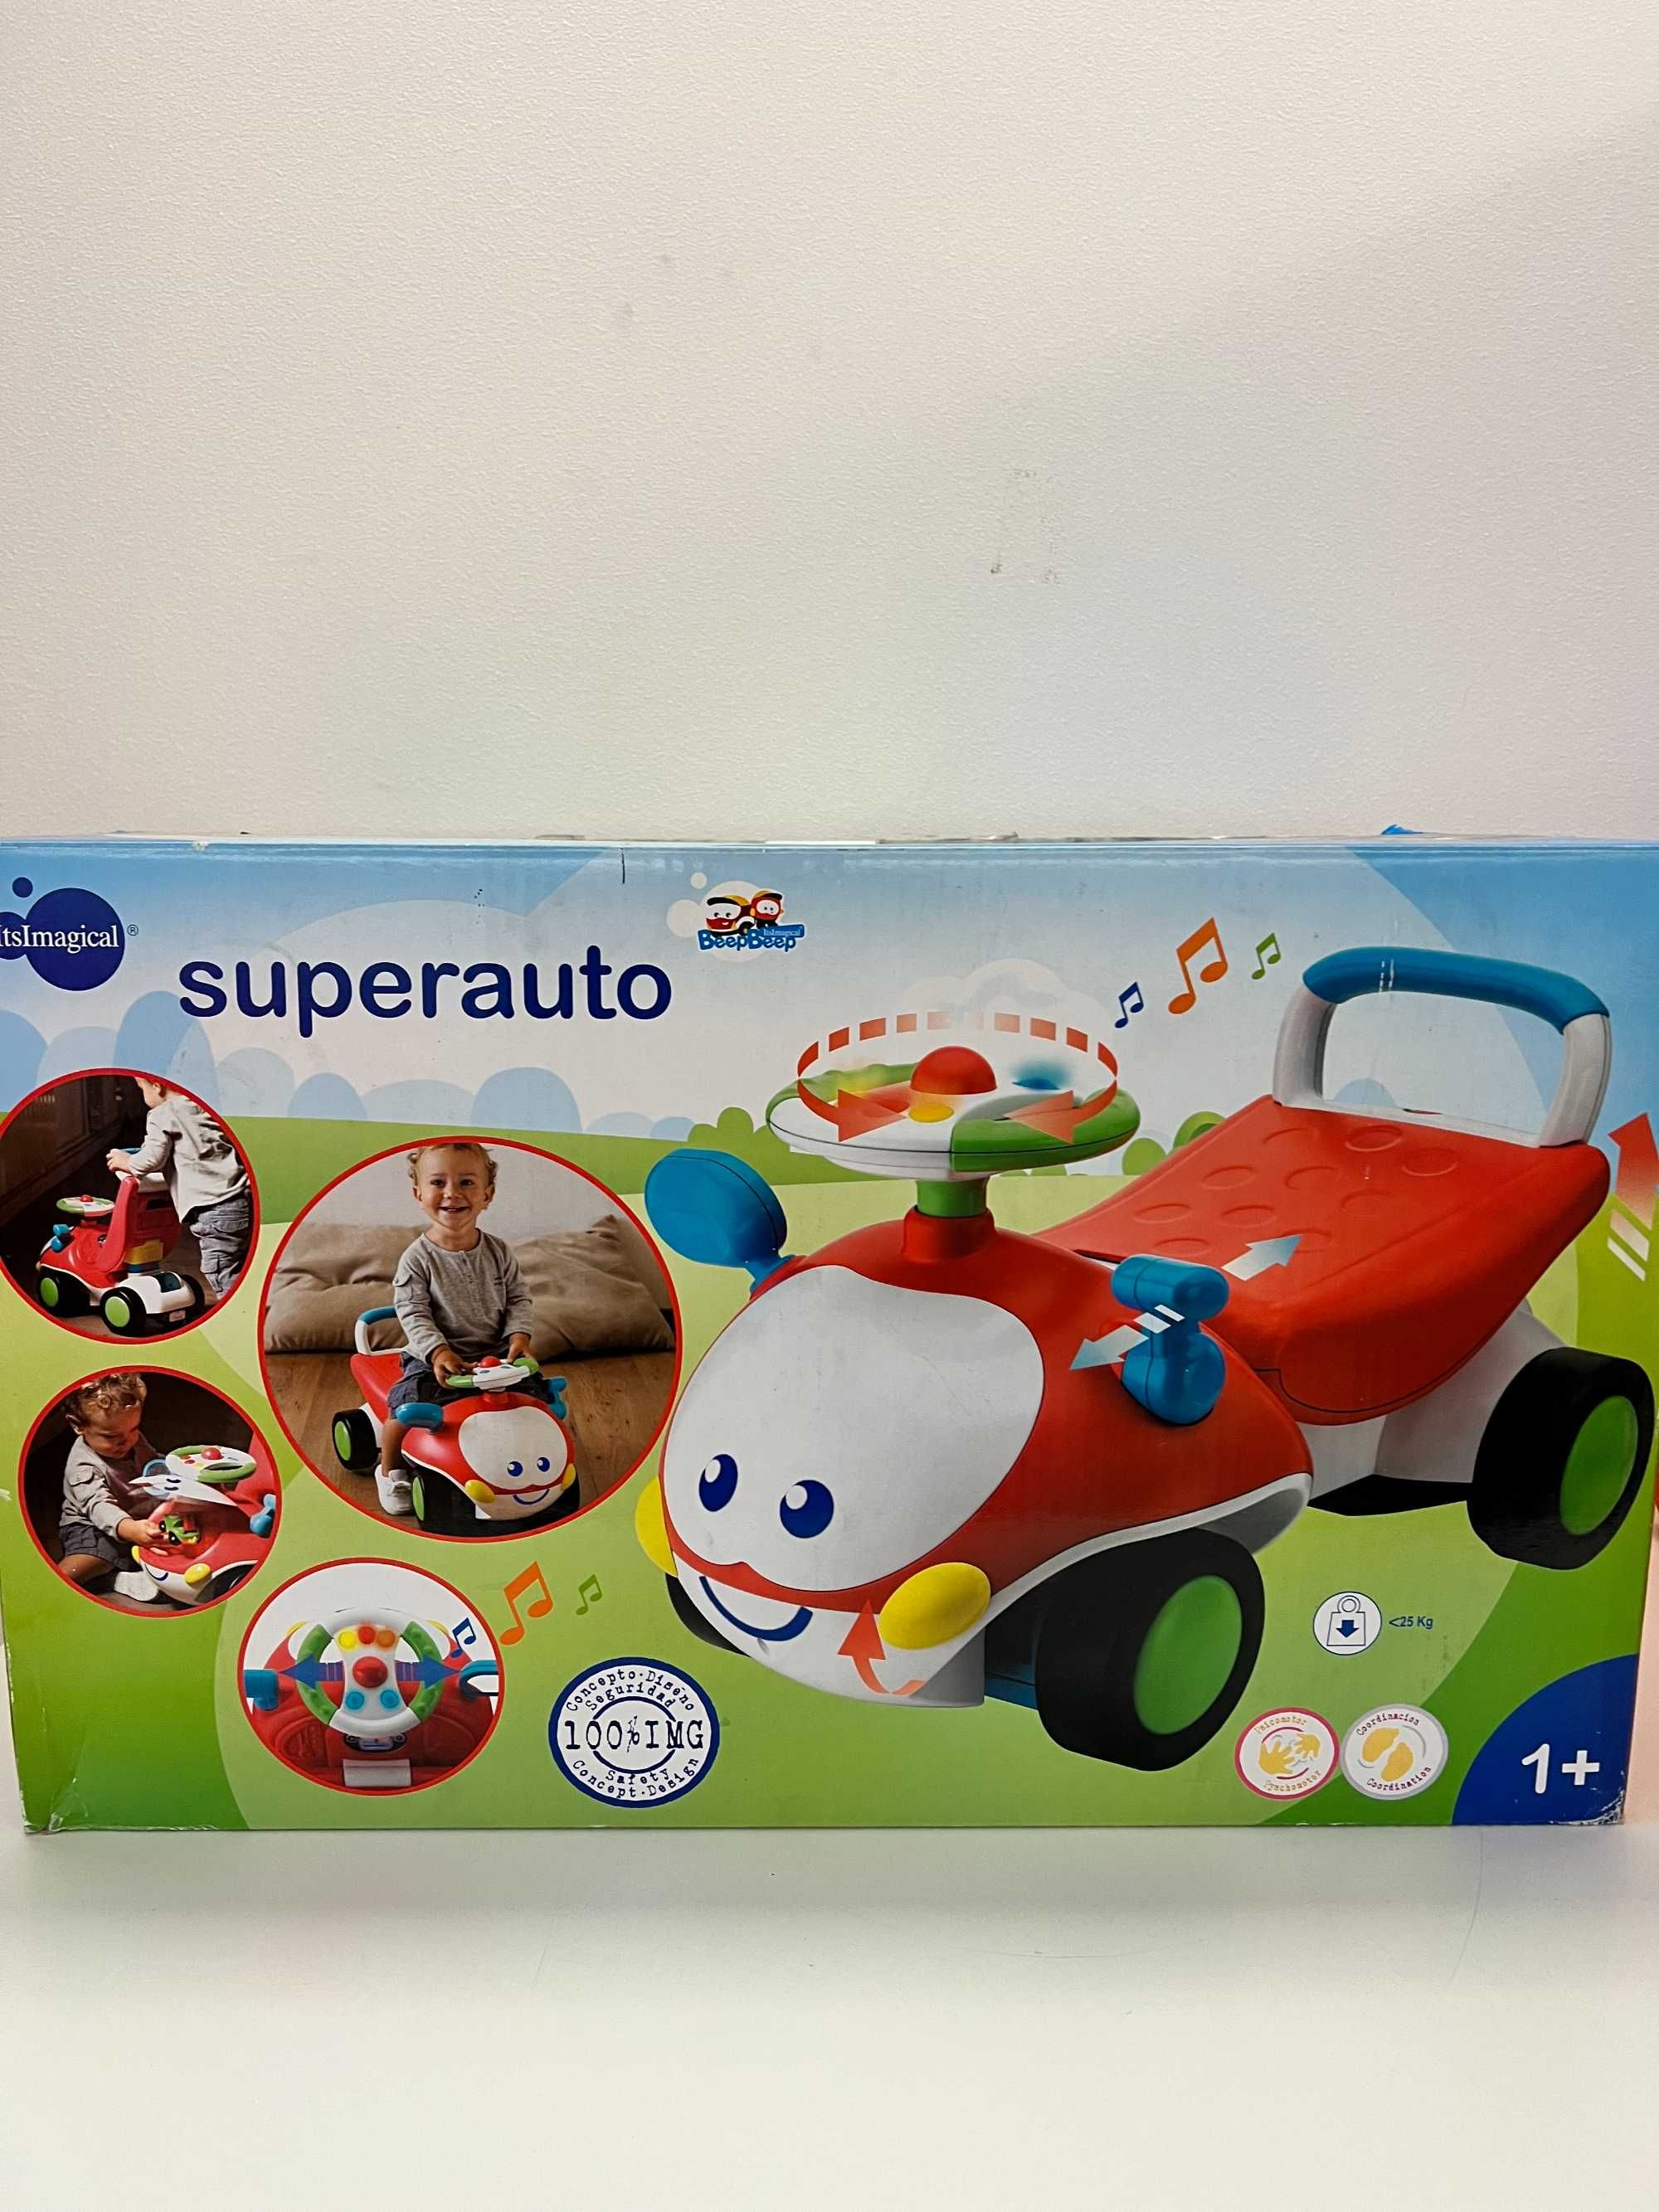 Andador de bébés cavaleiro - Superauto Beep-Beep Imaginarium